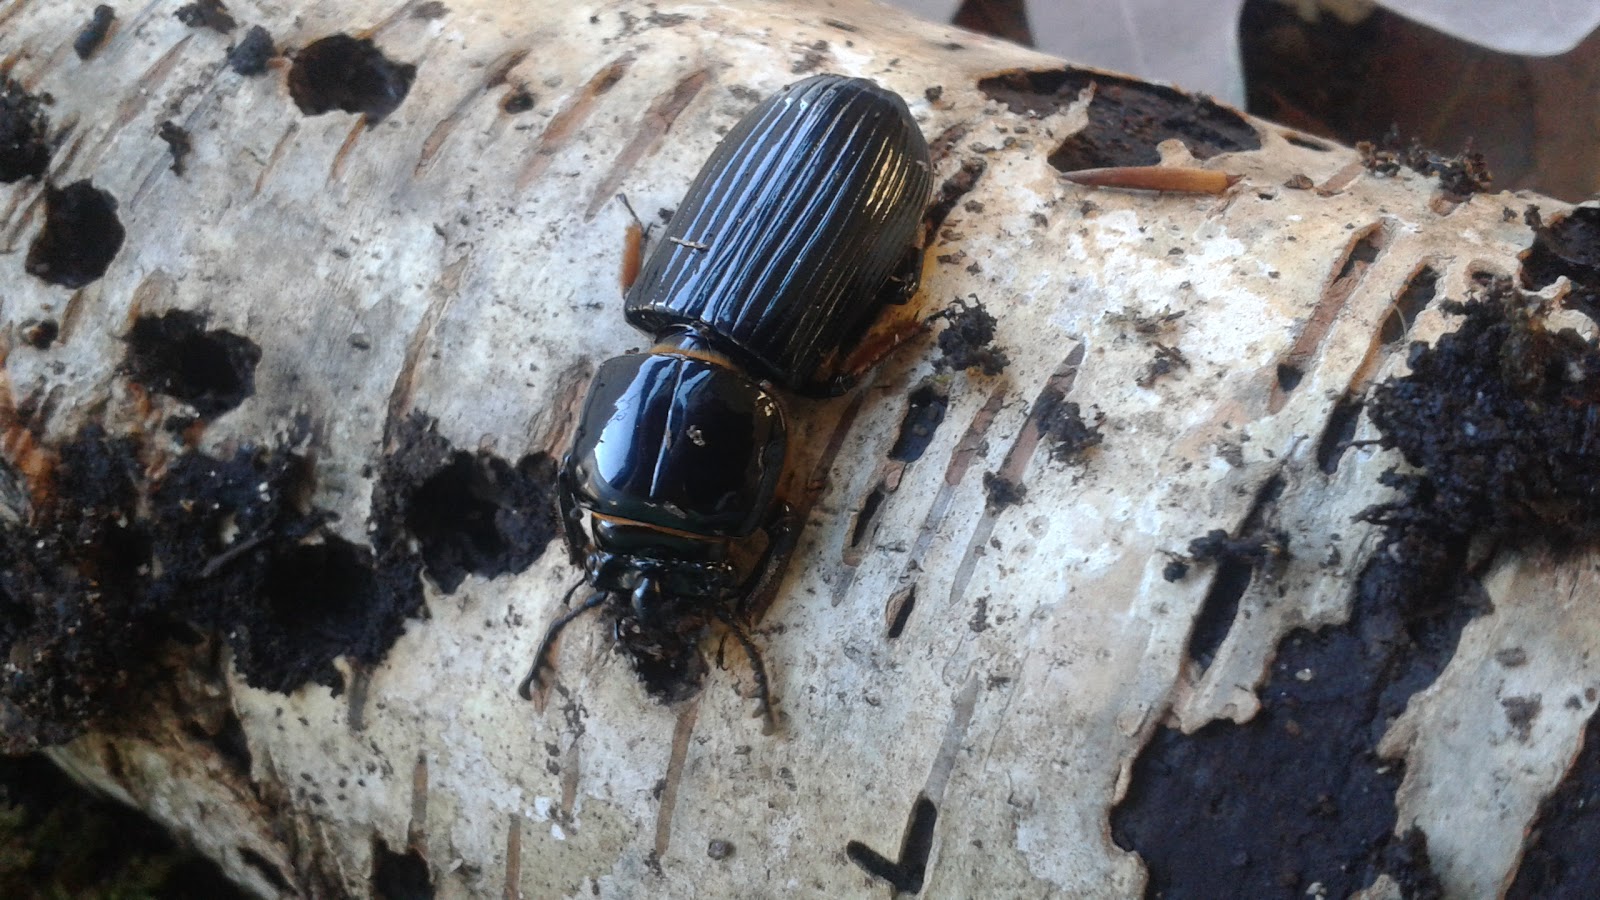 15 Minute Field Trips: Bess Beetles